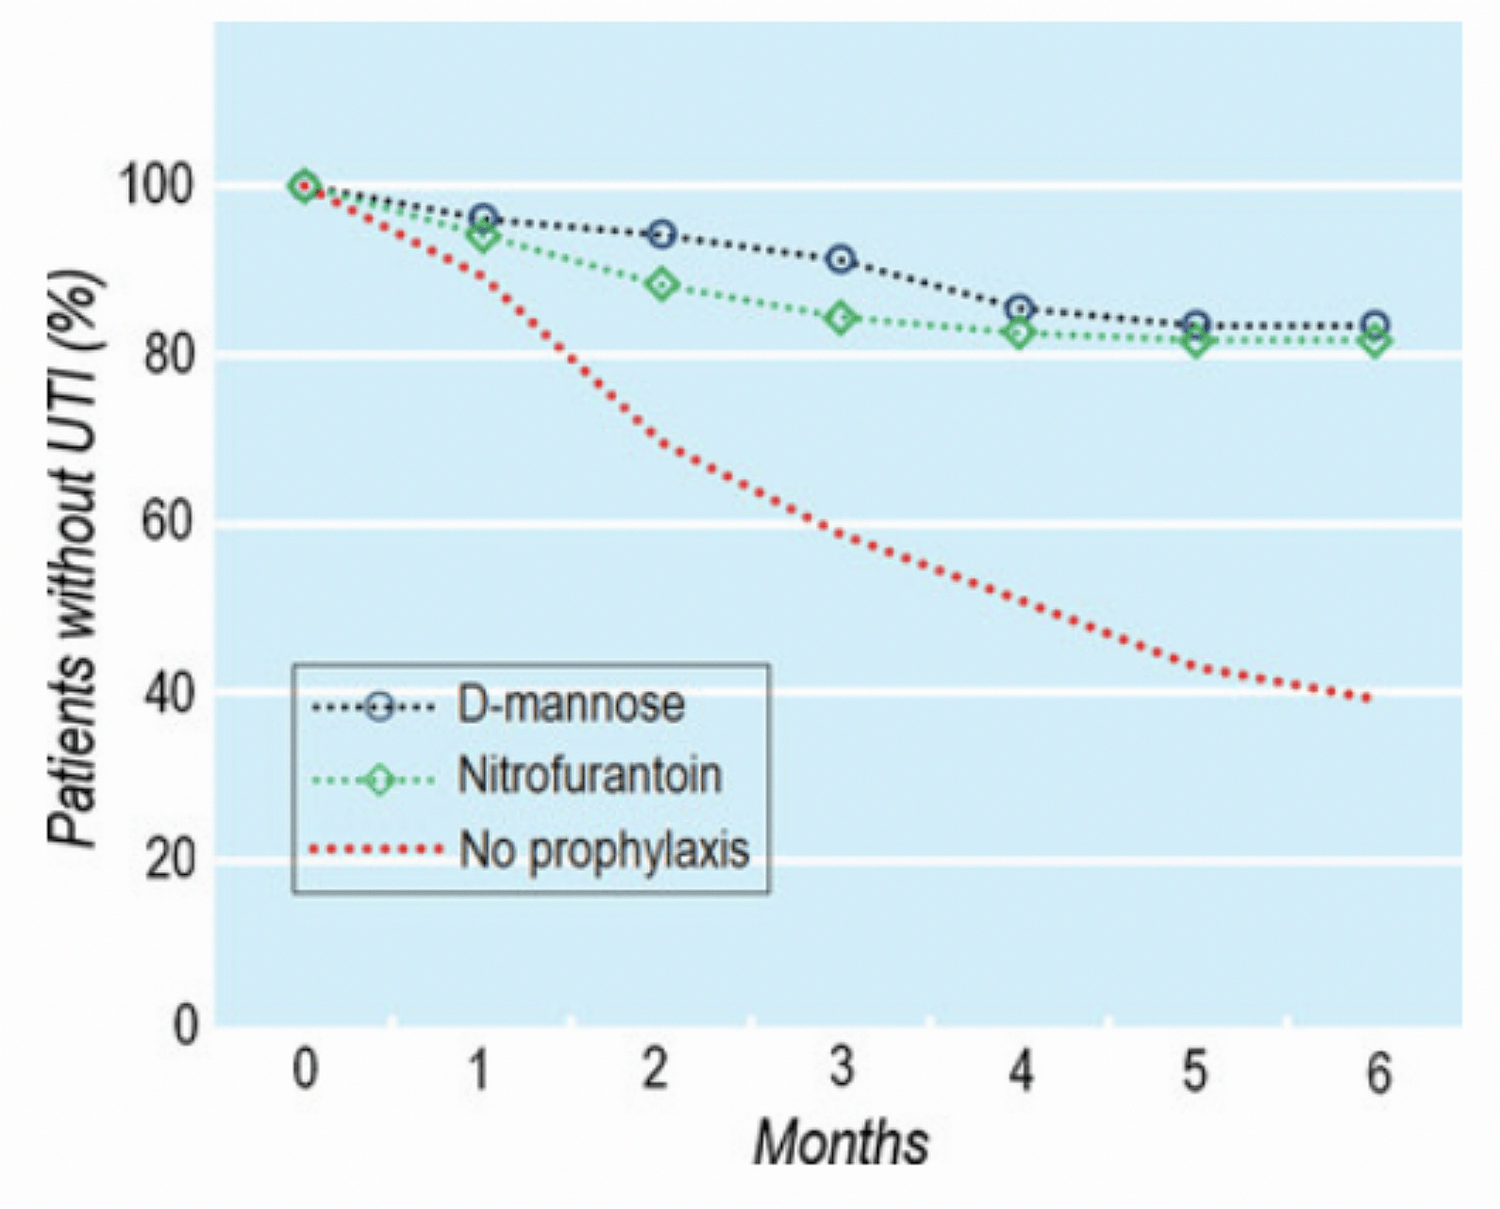 Доля пациентов без рецидива ИМП на фоне профилактики D-маннозой и нитрофурантоином